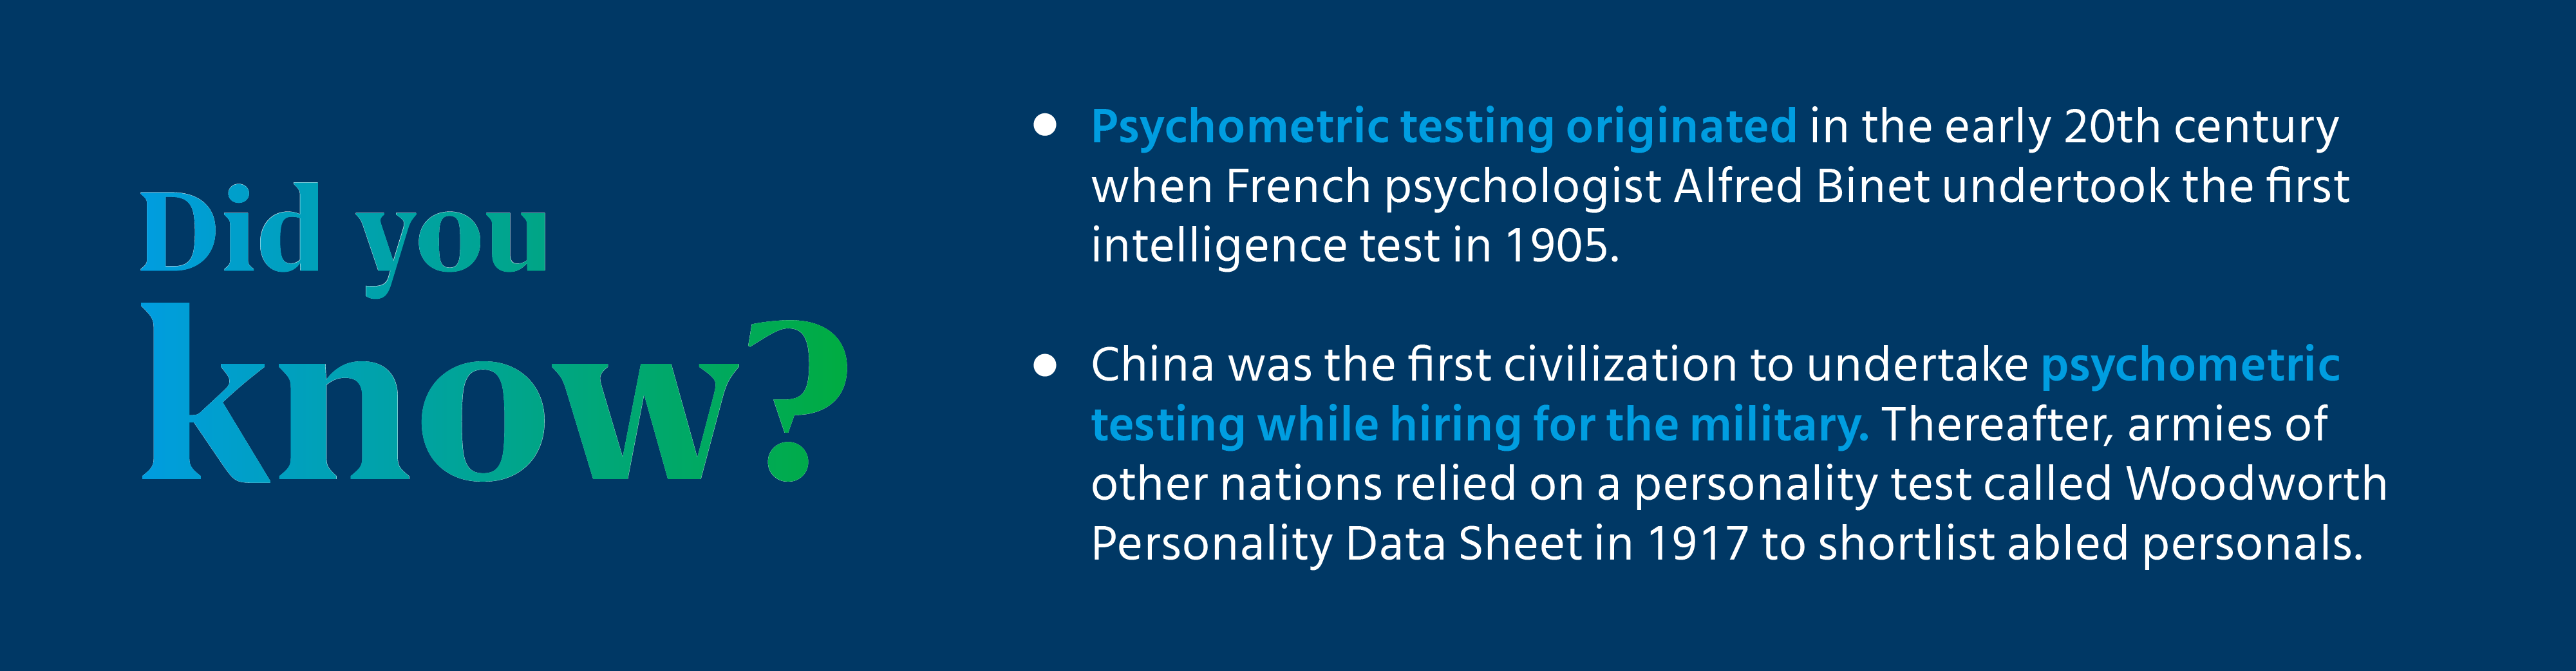 History of psychometric tests